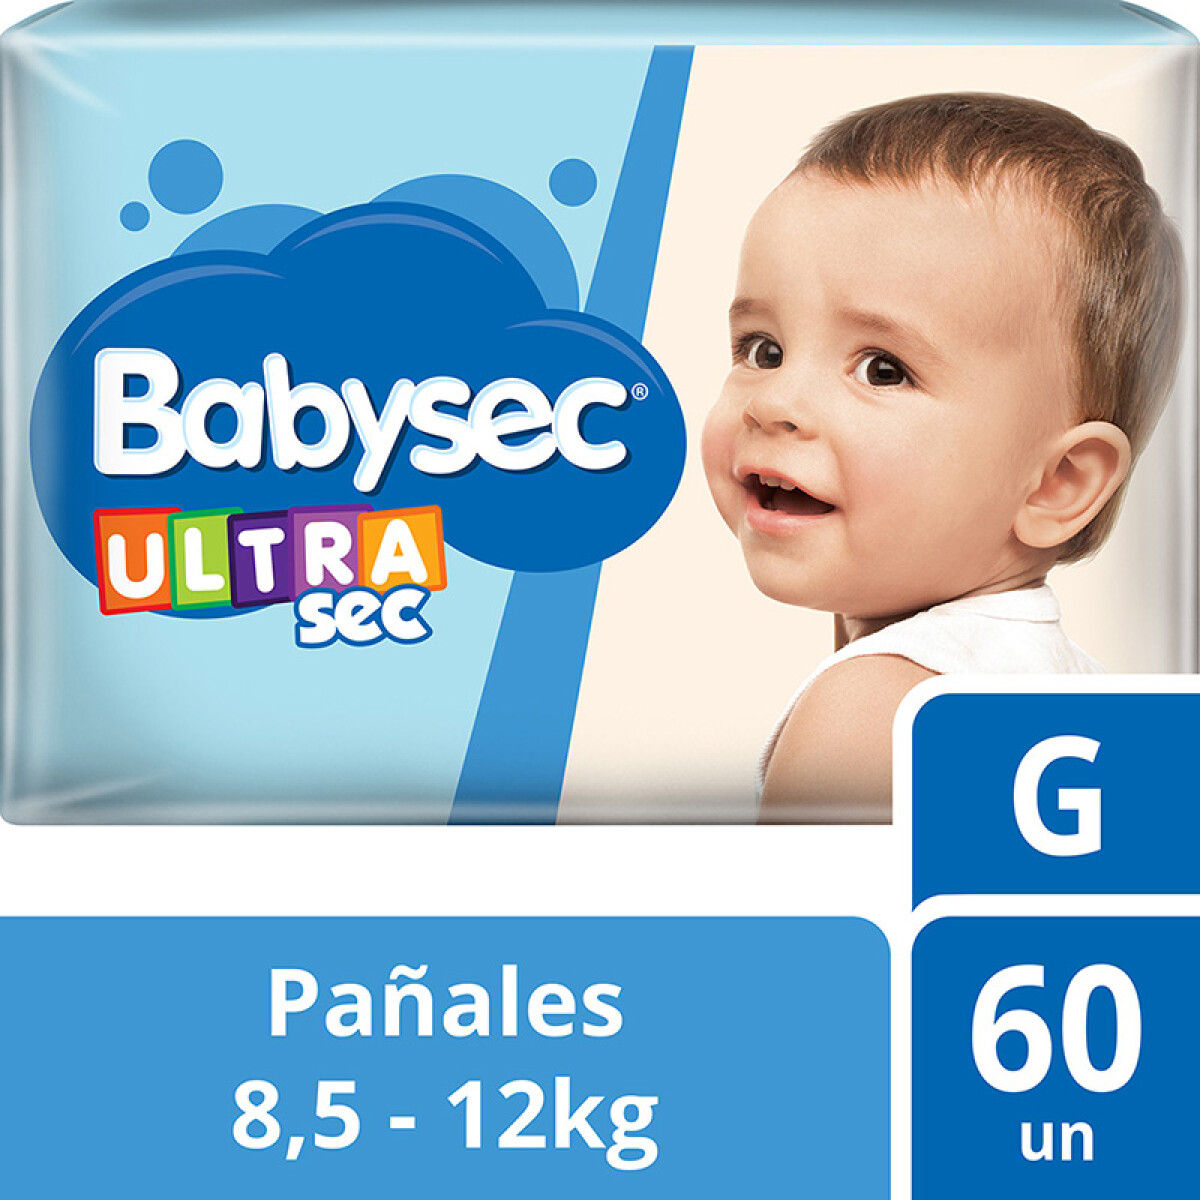 Baby Sec pañales Ultra Sec - Gx60 